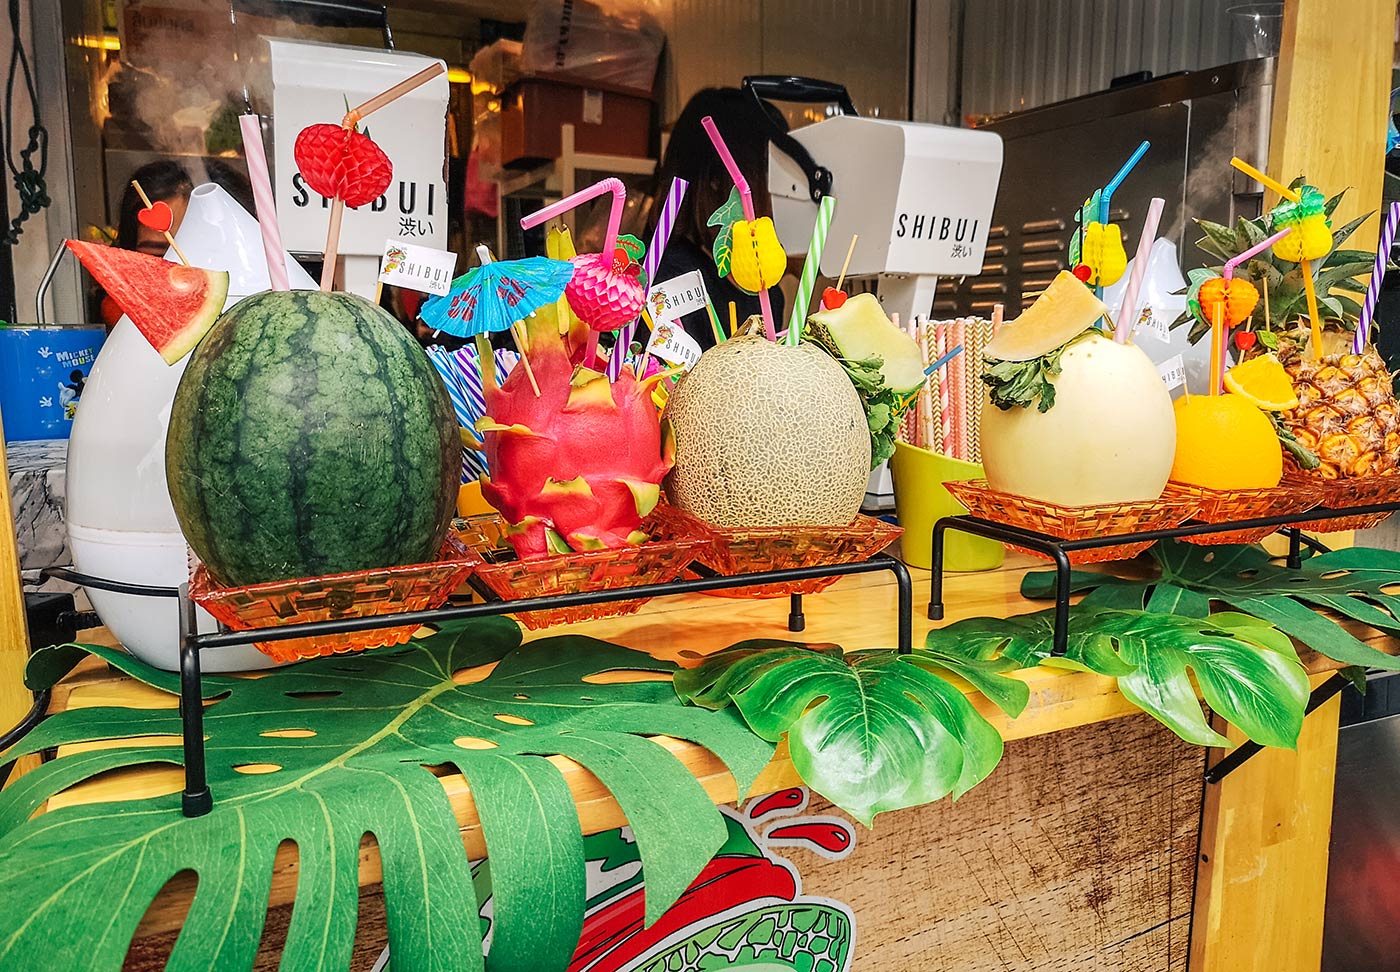 Cócteles de melón en el mercado de fin de semana de Chatuchak en Bangkok - la guía definitiva